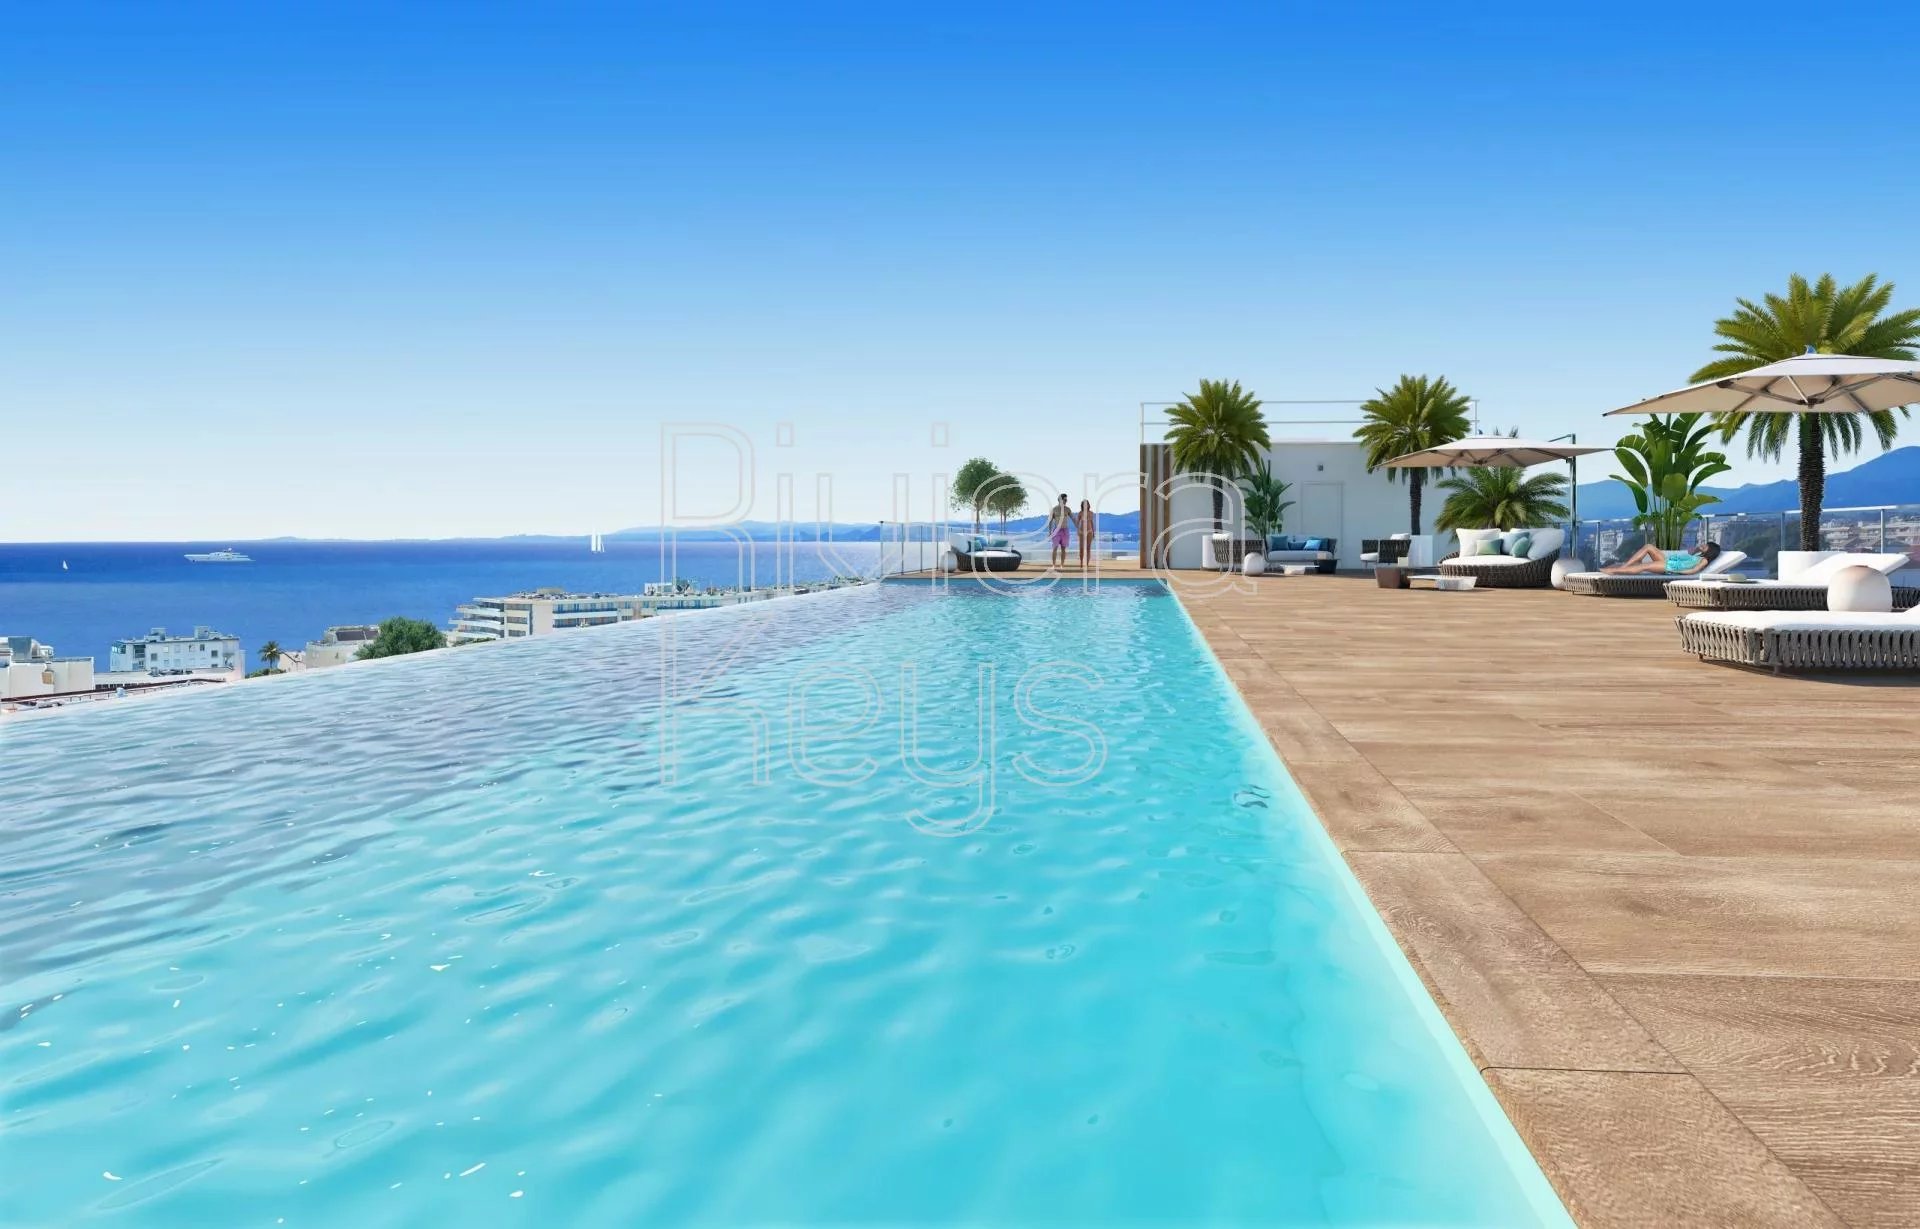 New apartments with sea views in Saint-Laurent-du-Var, near Nice